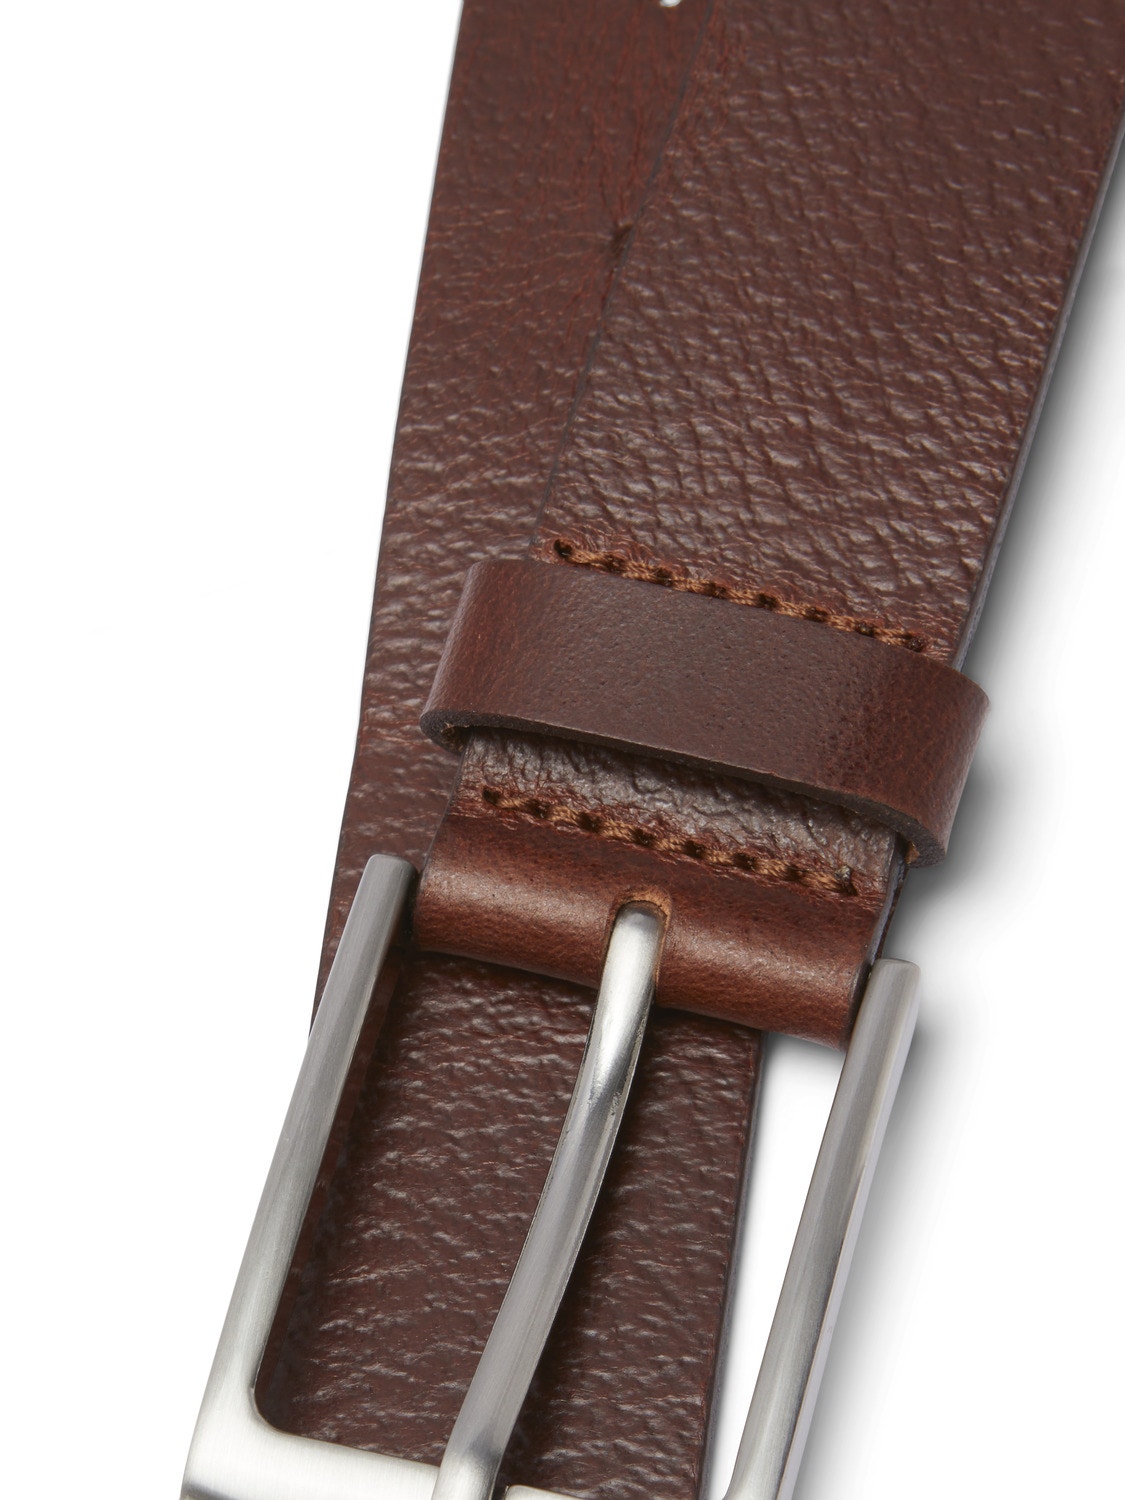 Jack & Jones Leather Belt -Brown Stone - 12242690